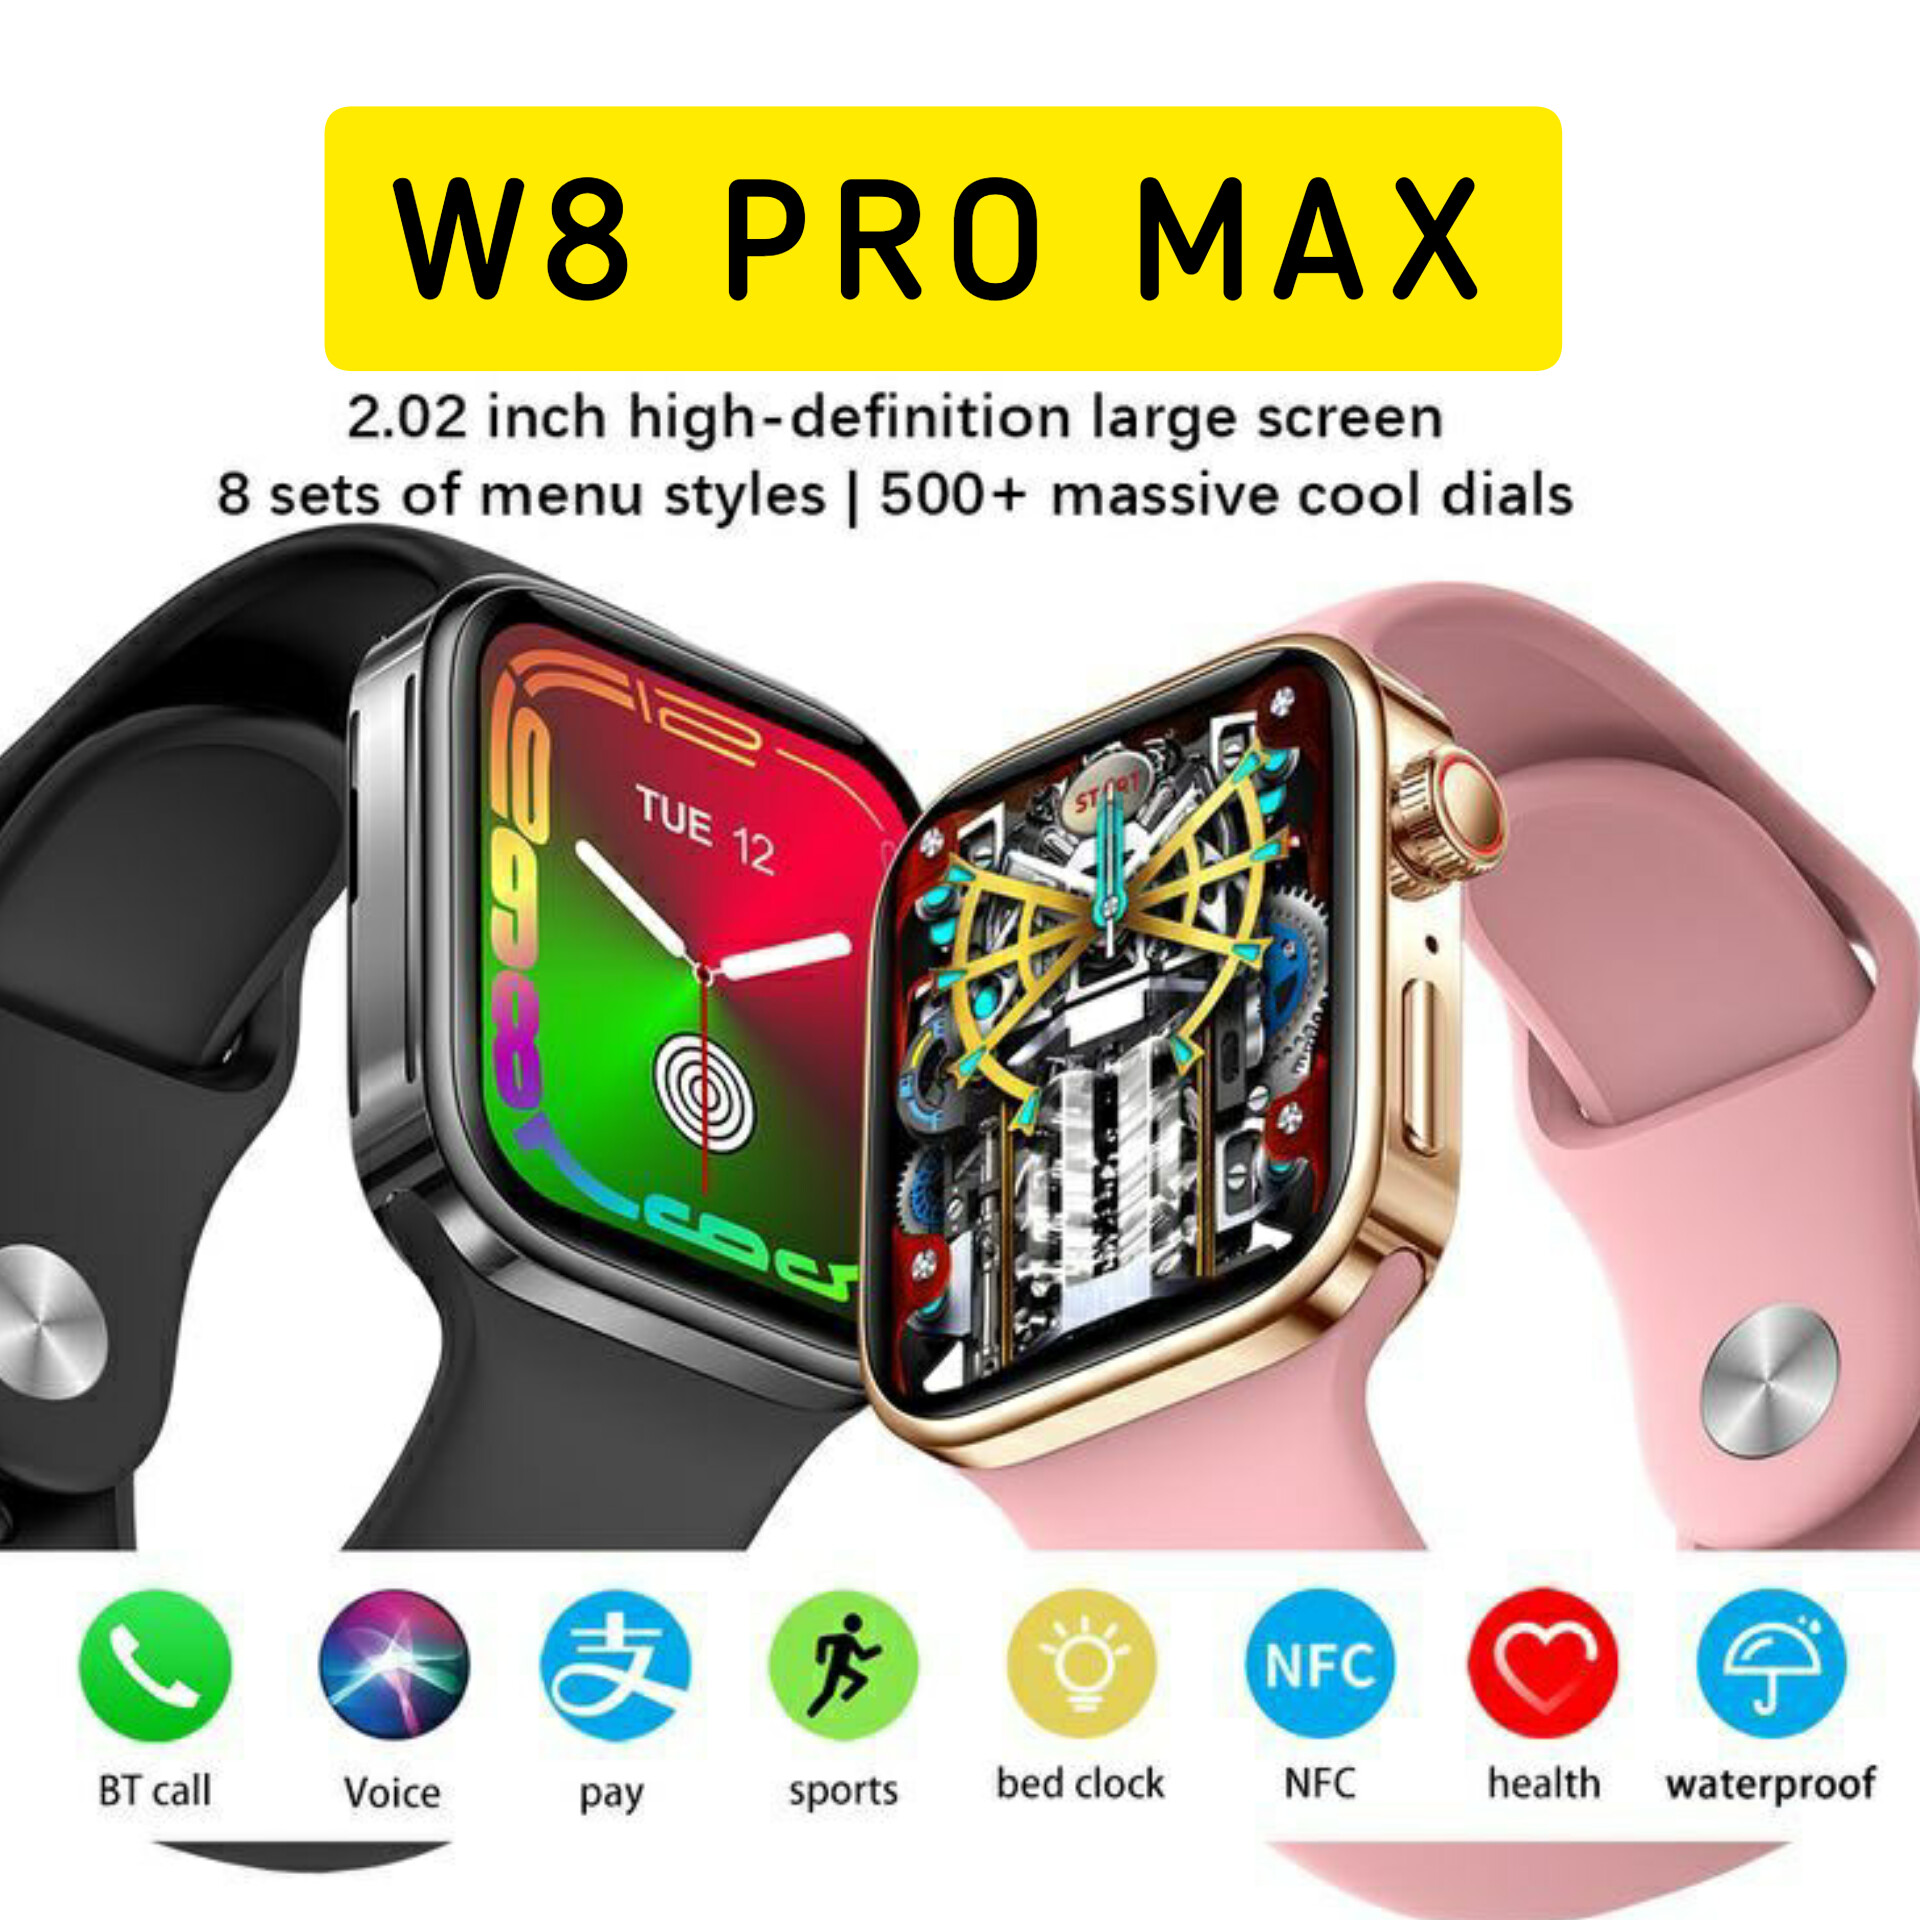 W8 Pro Max Smart Watch Price in Pakistan